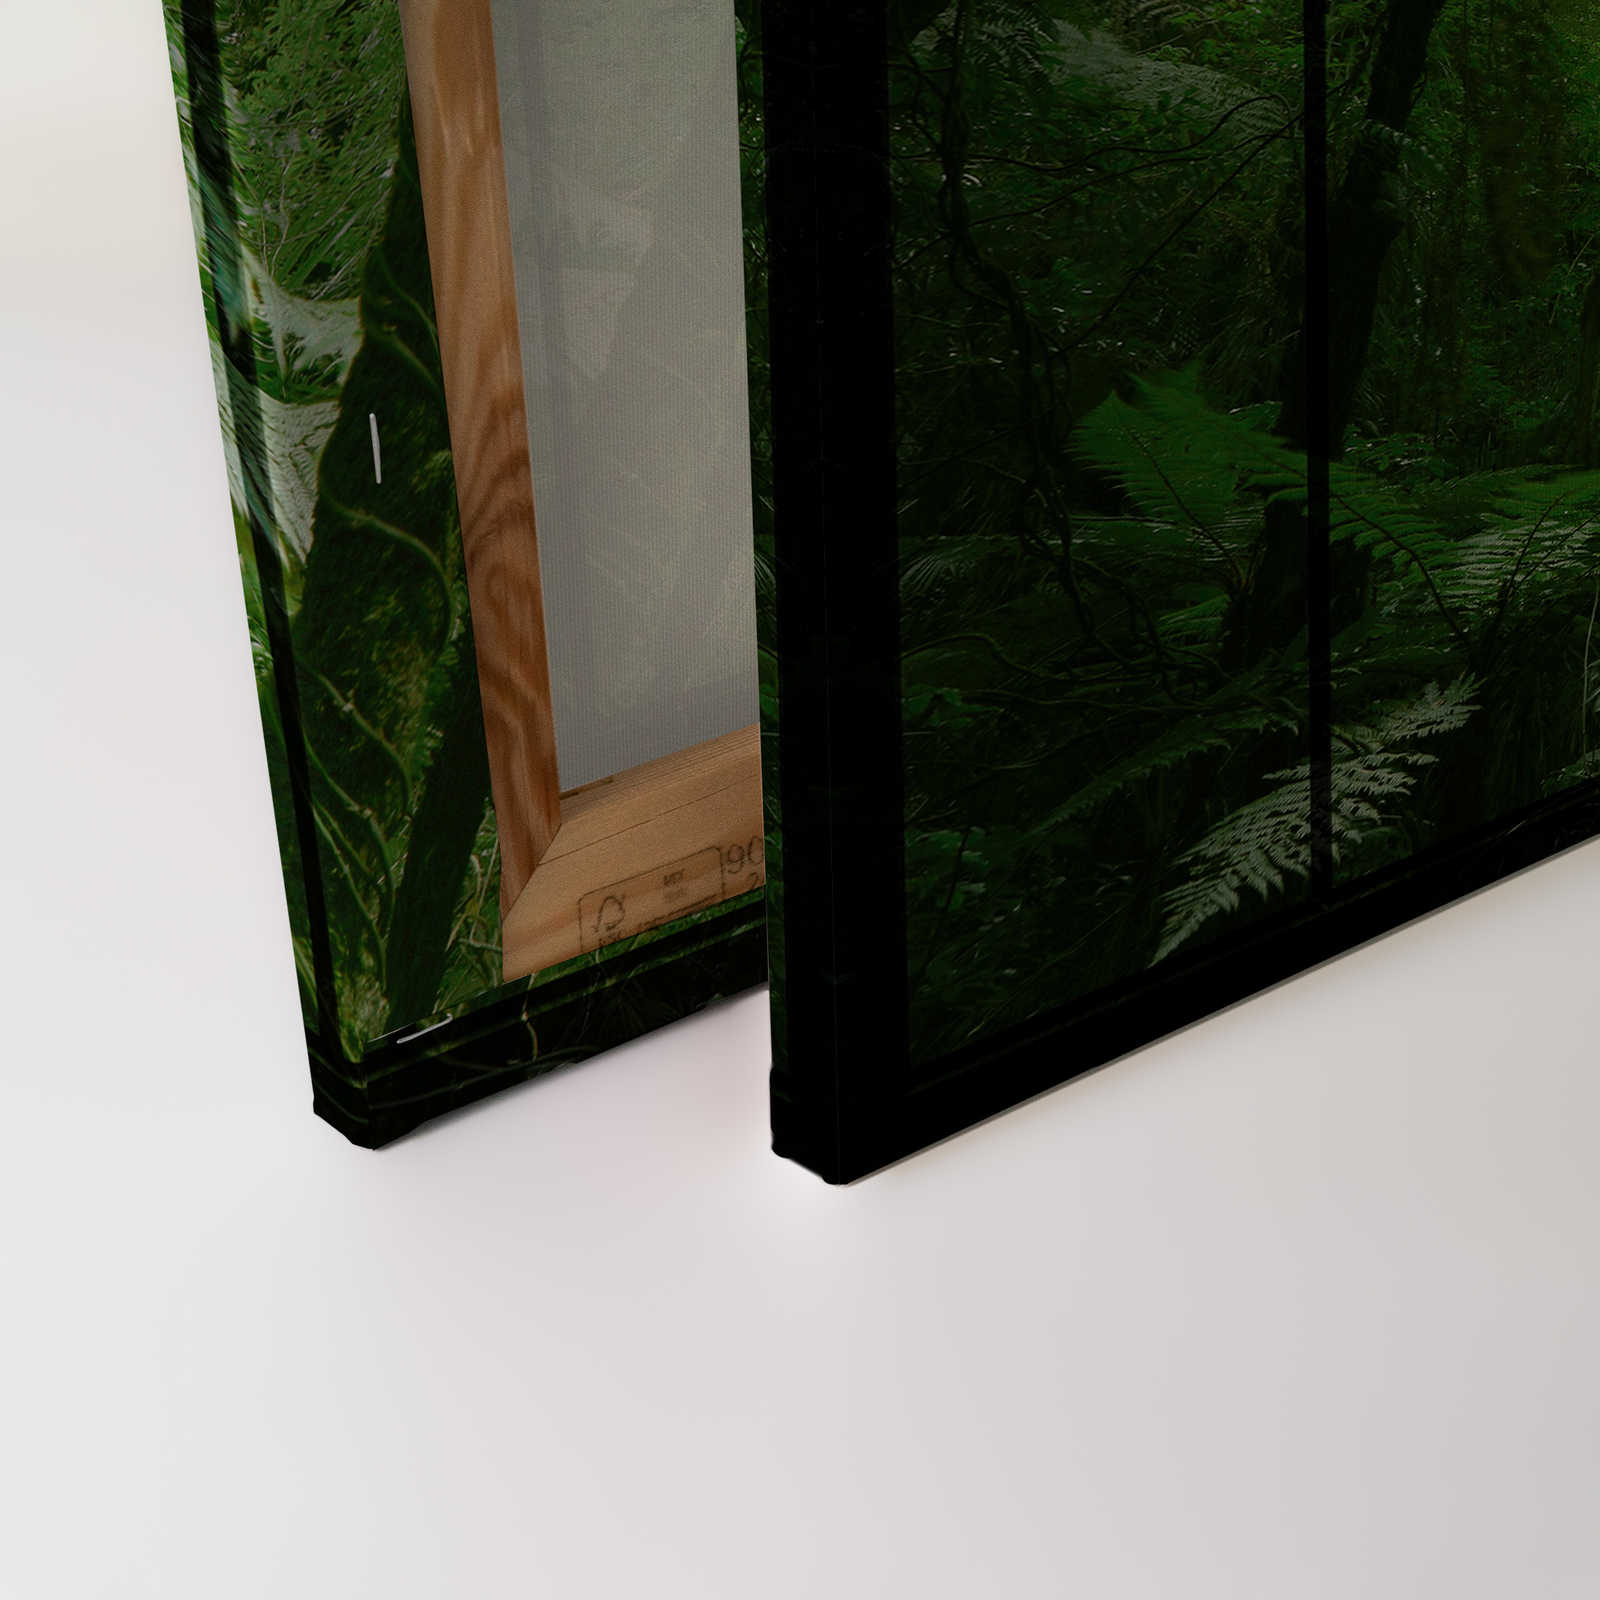             Rainforest 2 - Loftfenster Leinwandbild mit Dschungel Aussicht – 1,20 m x 0,80 m
        